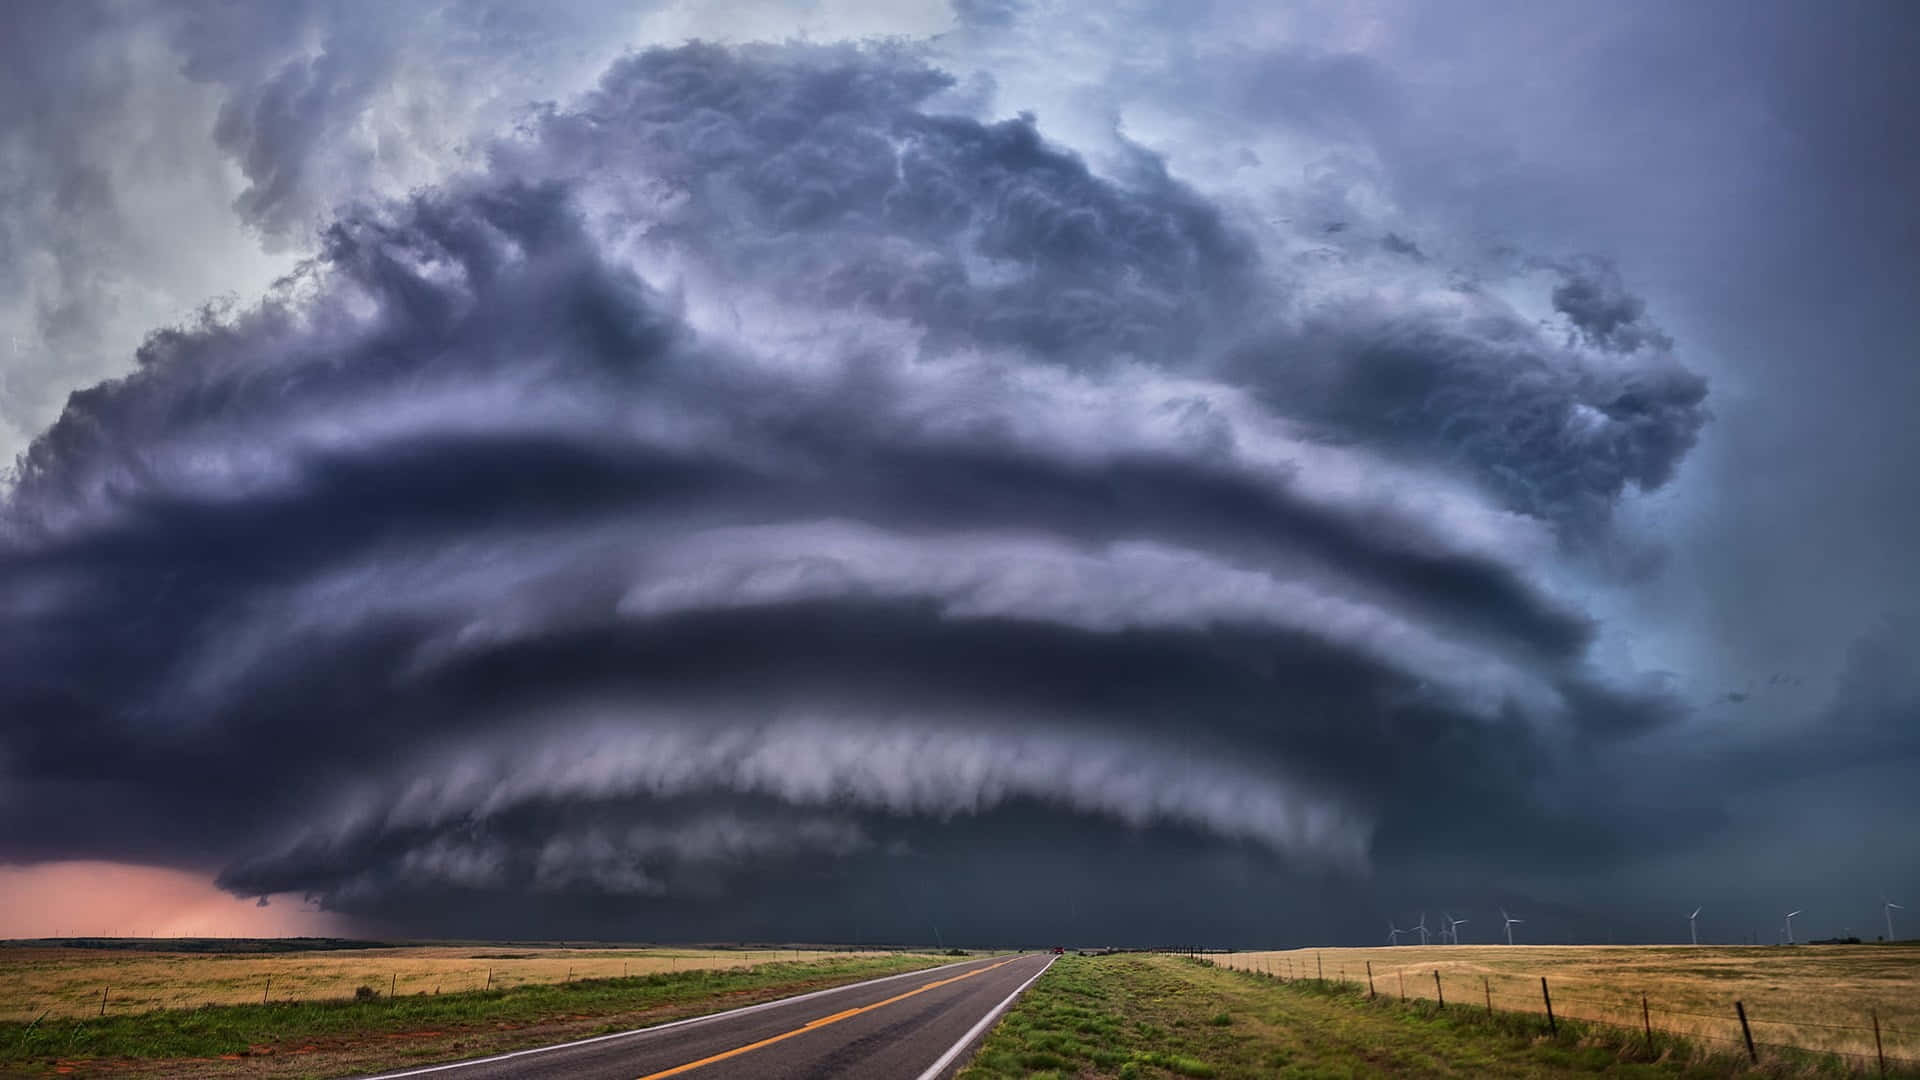 Wallpaper | Beautiful pictures | photo | picture | cyclone, hurricane,  tornado, tornado, clouds